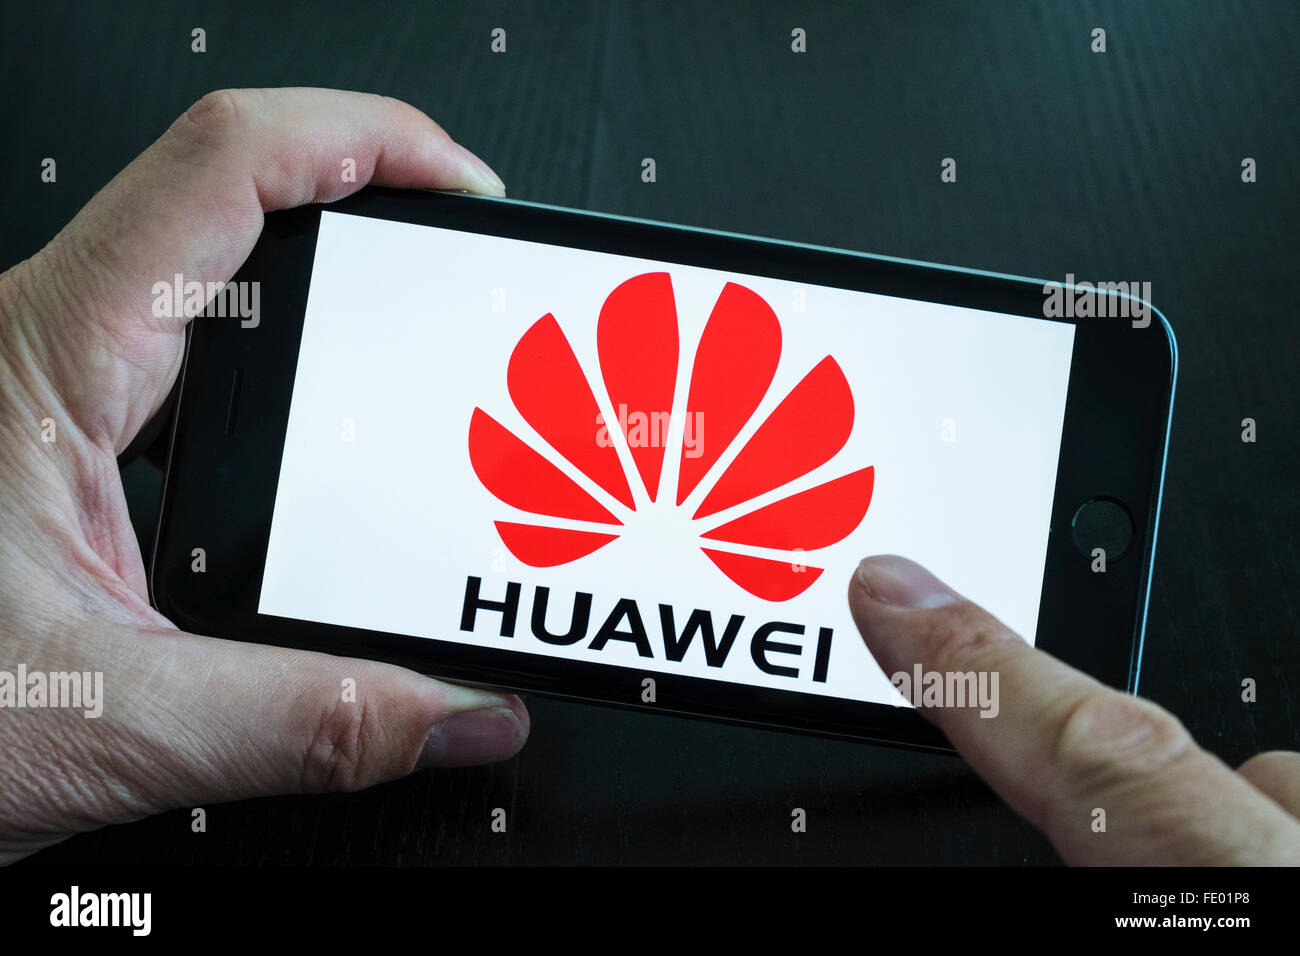 Huawei Chinese electronics company website logo showing on iPhone 6 Plus smart phone Stock Photo